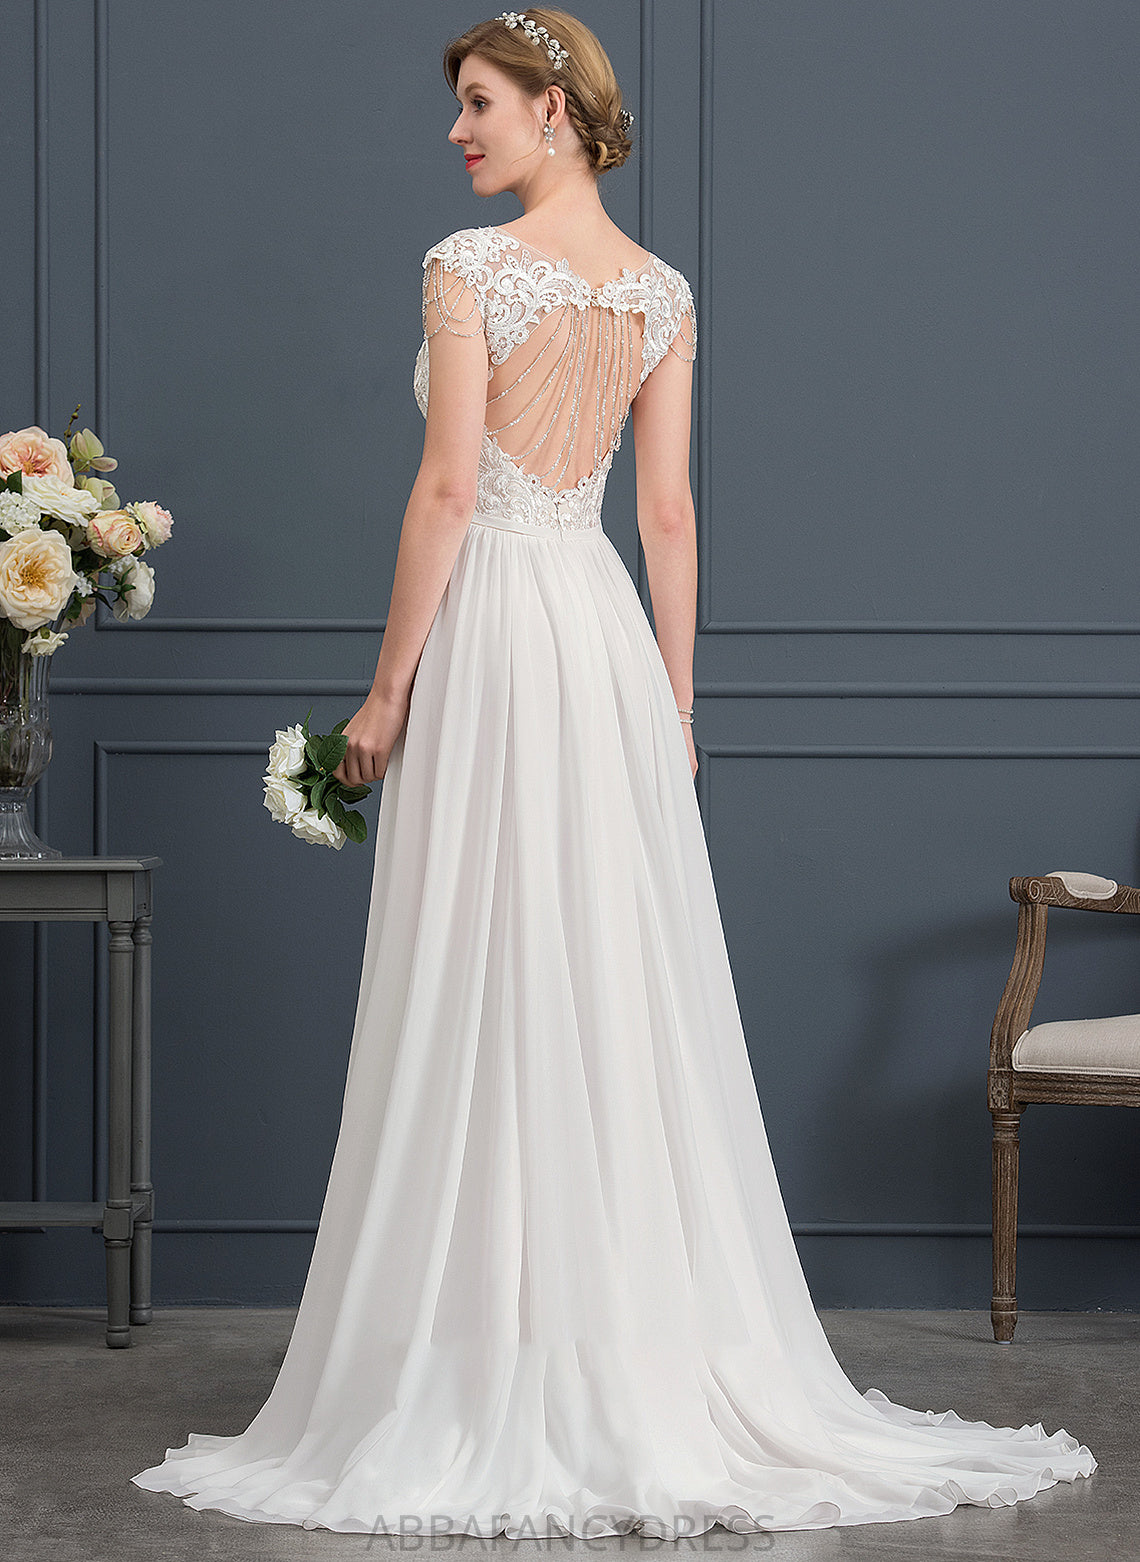 Wedding Train Chiffon Dress Sweep Marlie V-neck A-Line With Sequins Wedding Dresses Beading